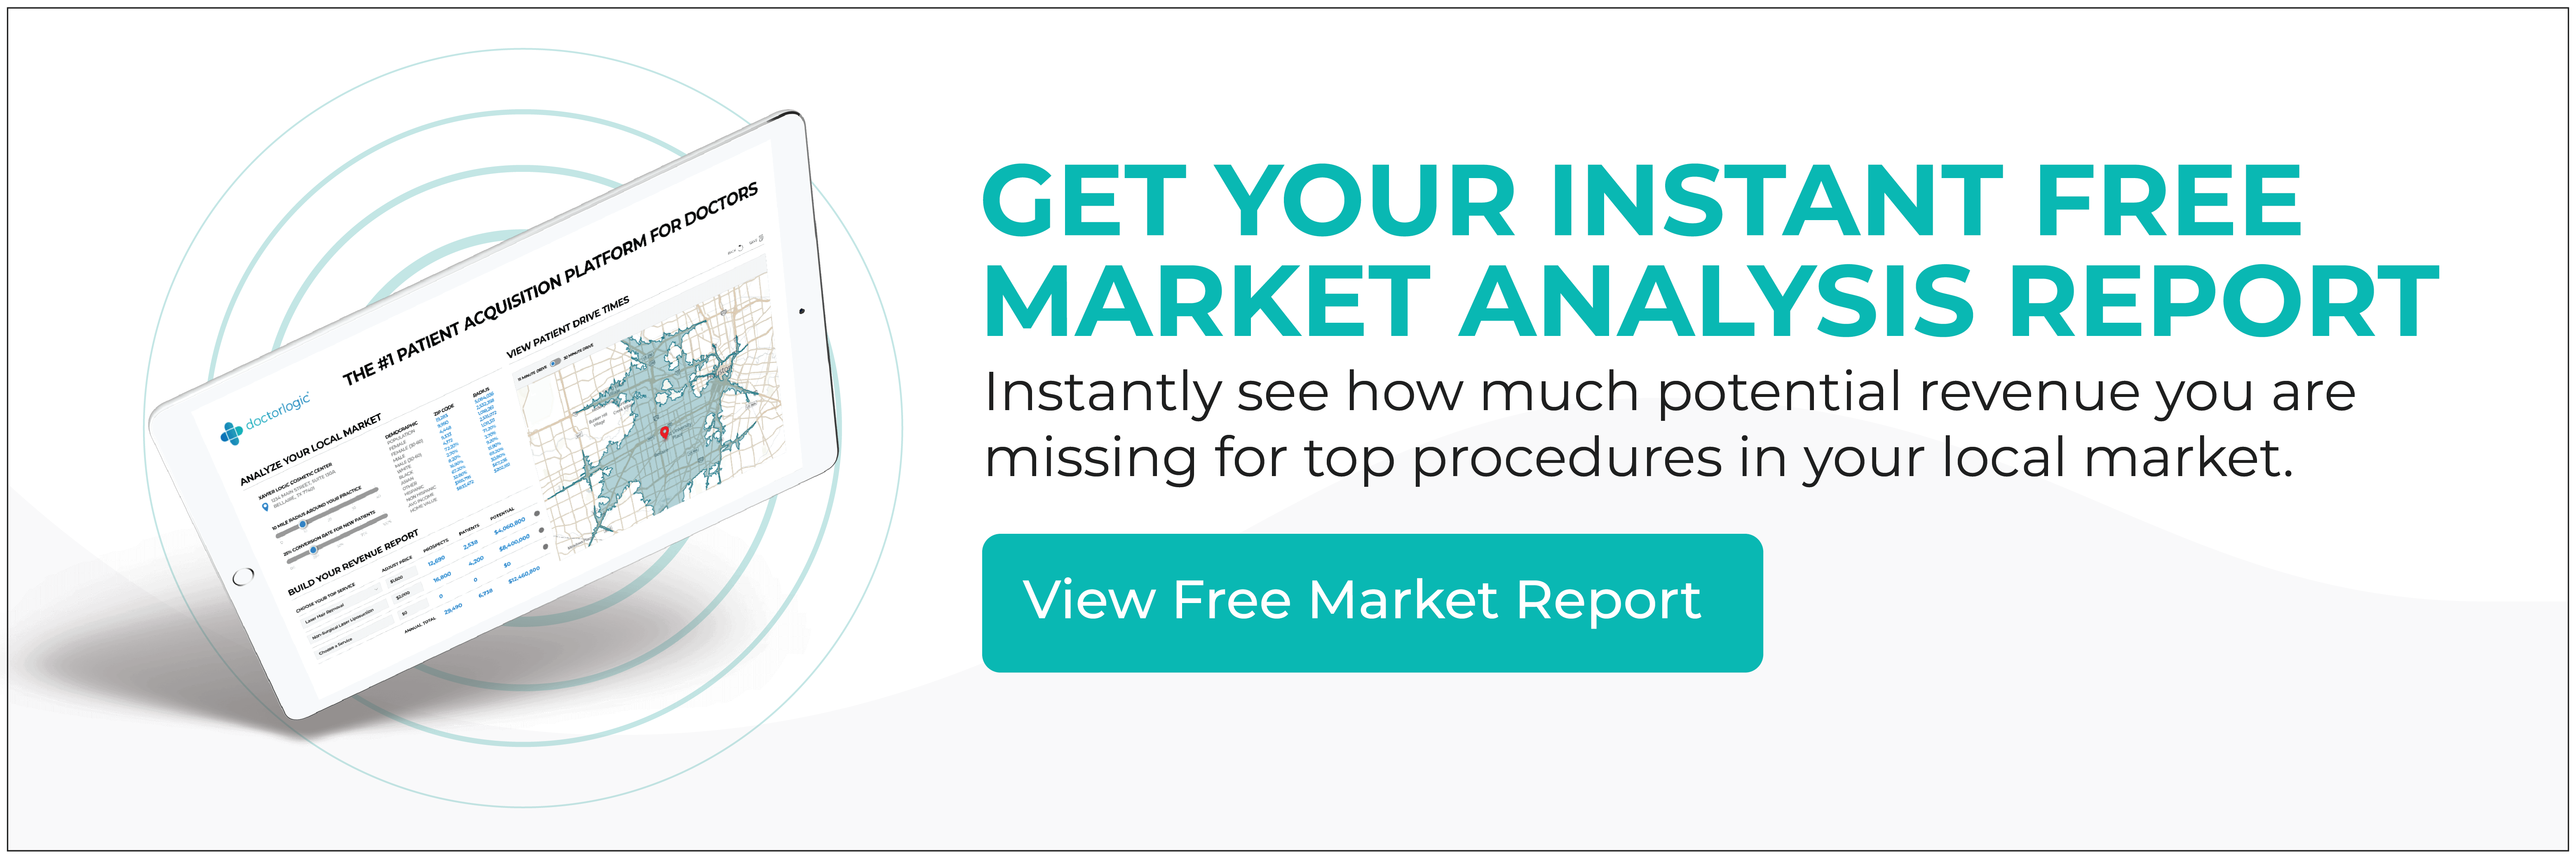 Get Your Free Market Analysis